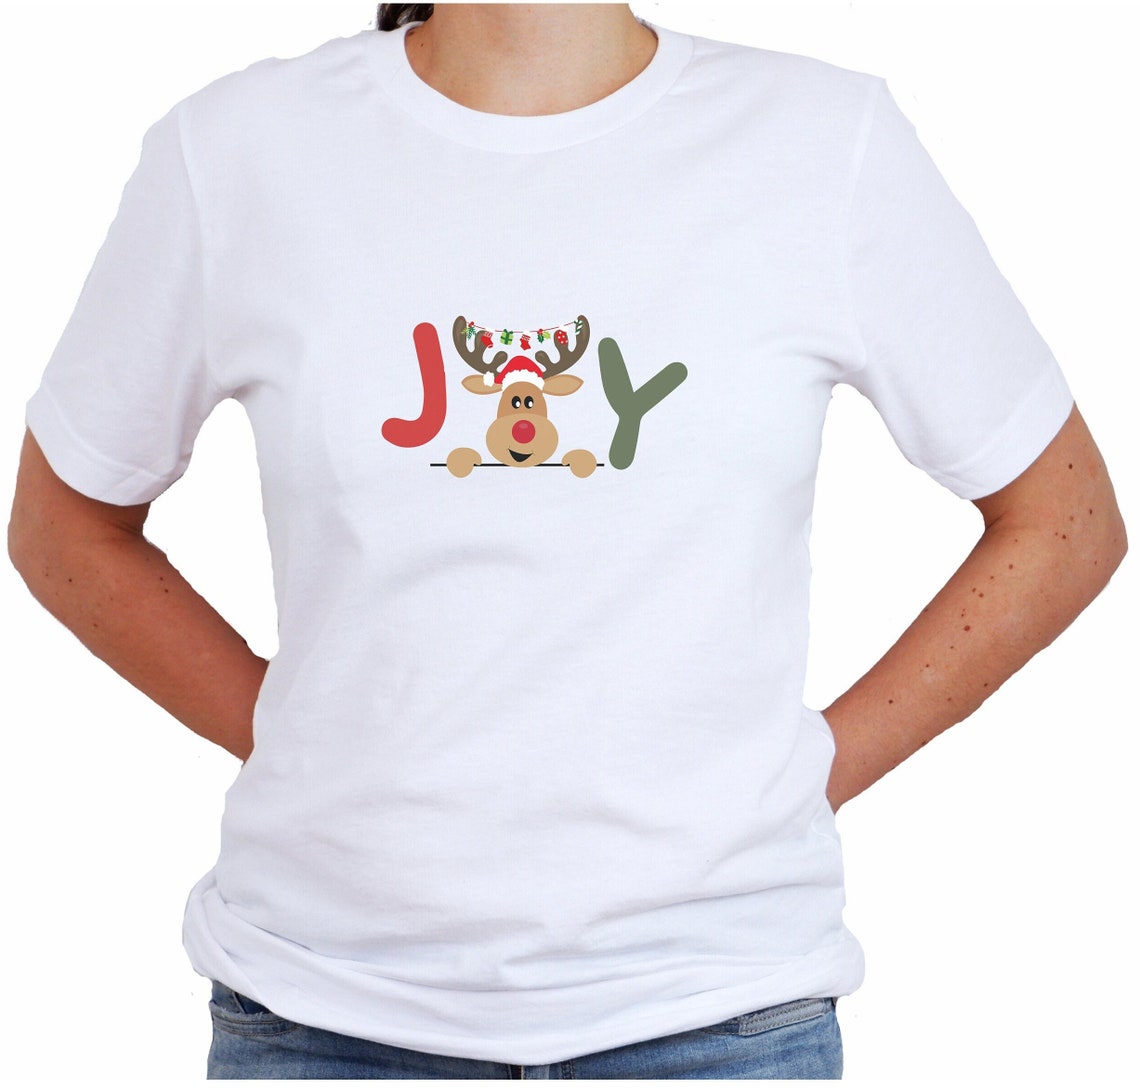 Joy Christmas Tshirt or Sweatshirt